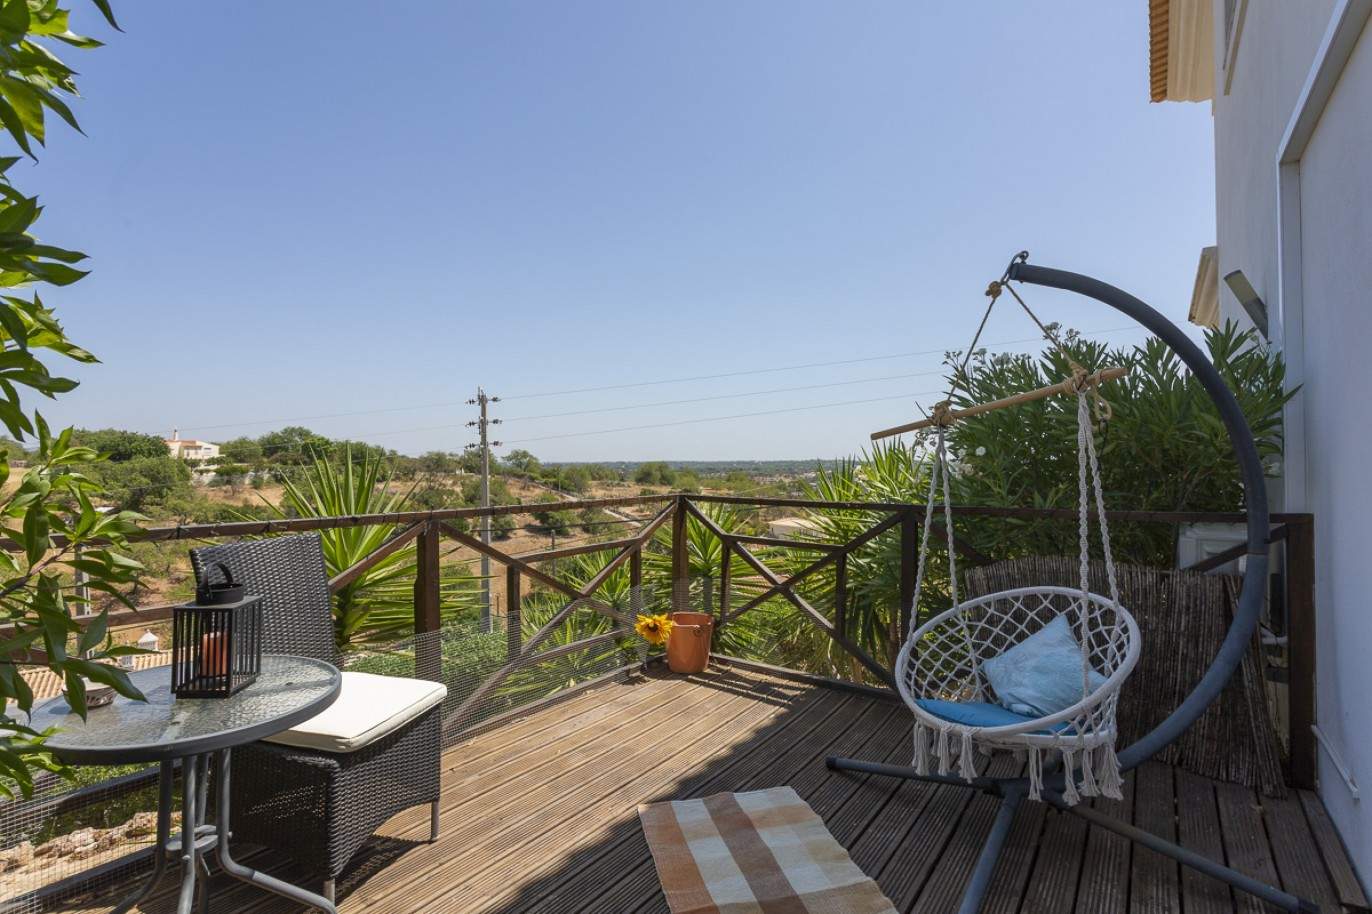 4 Bedroom Villa with sea view, for sale in Boliqueime, Algarve_209944